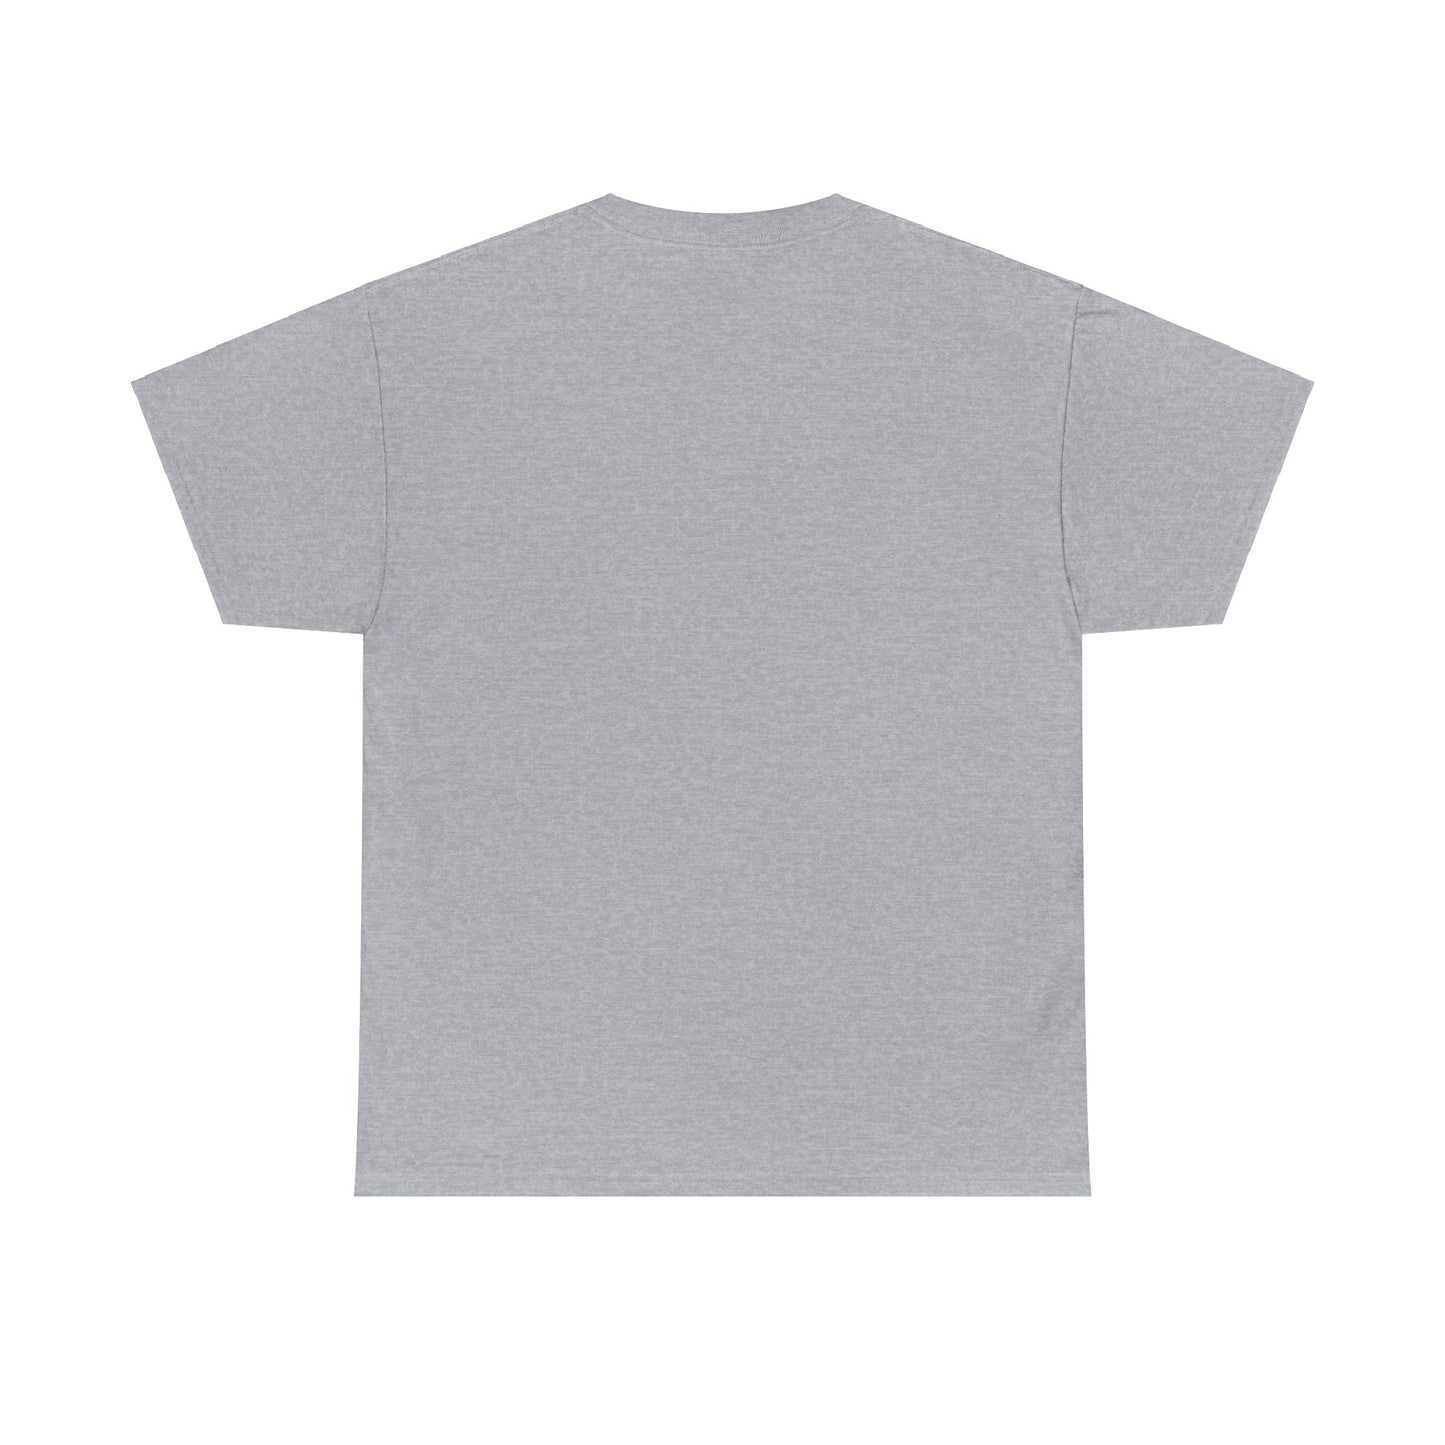 Classic Tech Seal - Men's Heavy Cotton T-Shirt